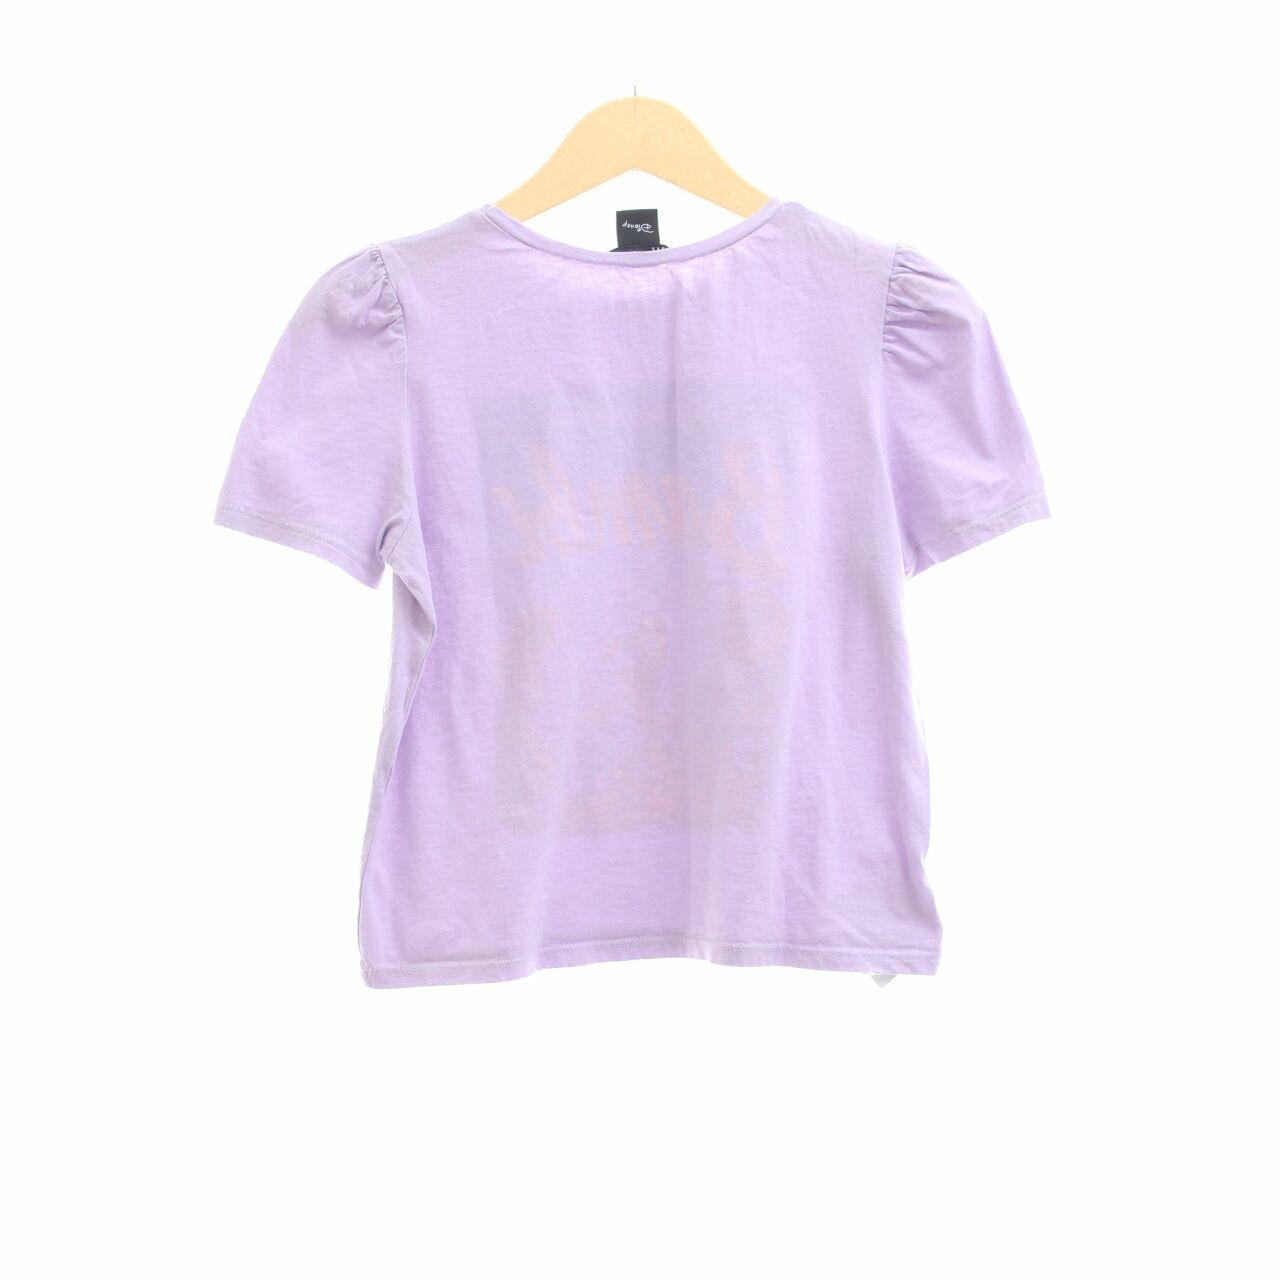 Zara Lilac Printed T-Shirt